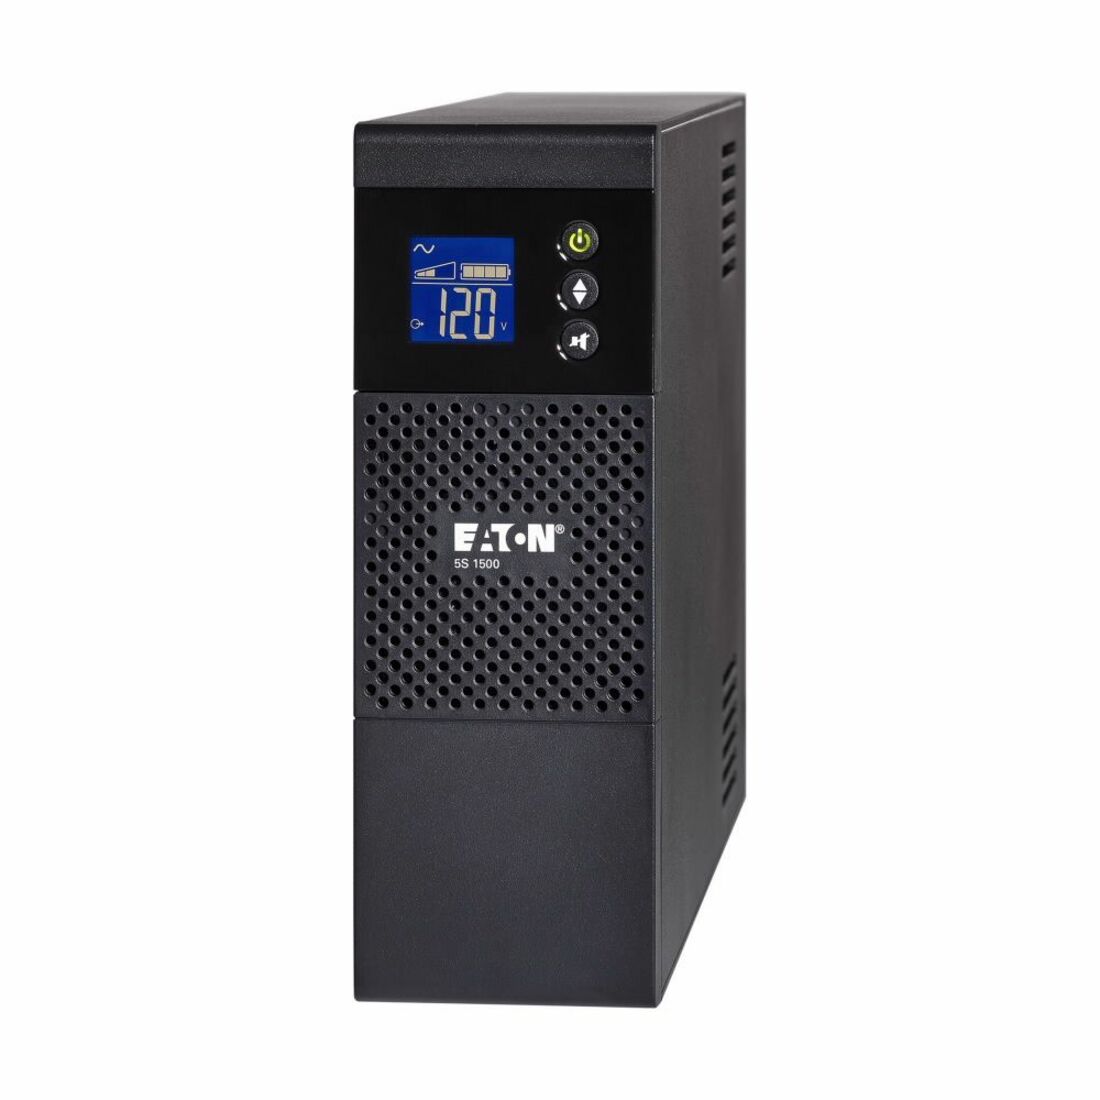 Eaton 5S1500G 5S UPS, 1500VA Tower 208/230V, 3 Year Warranty, USB, RoHS Certified